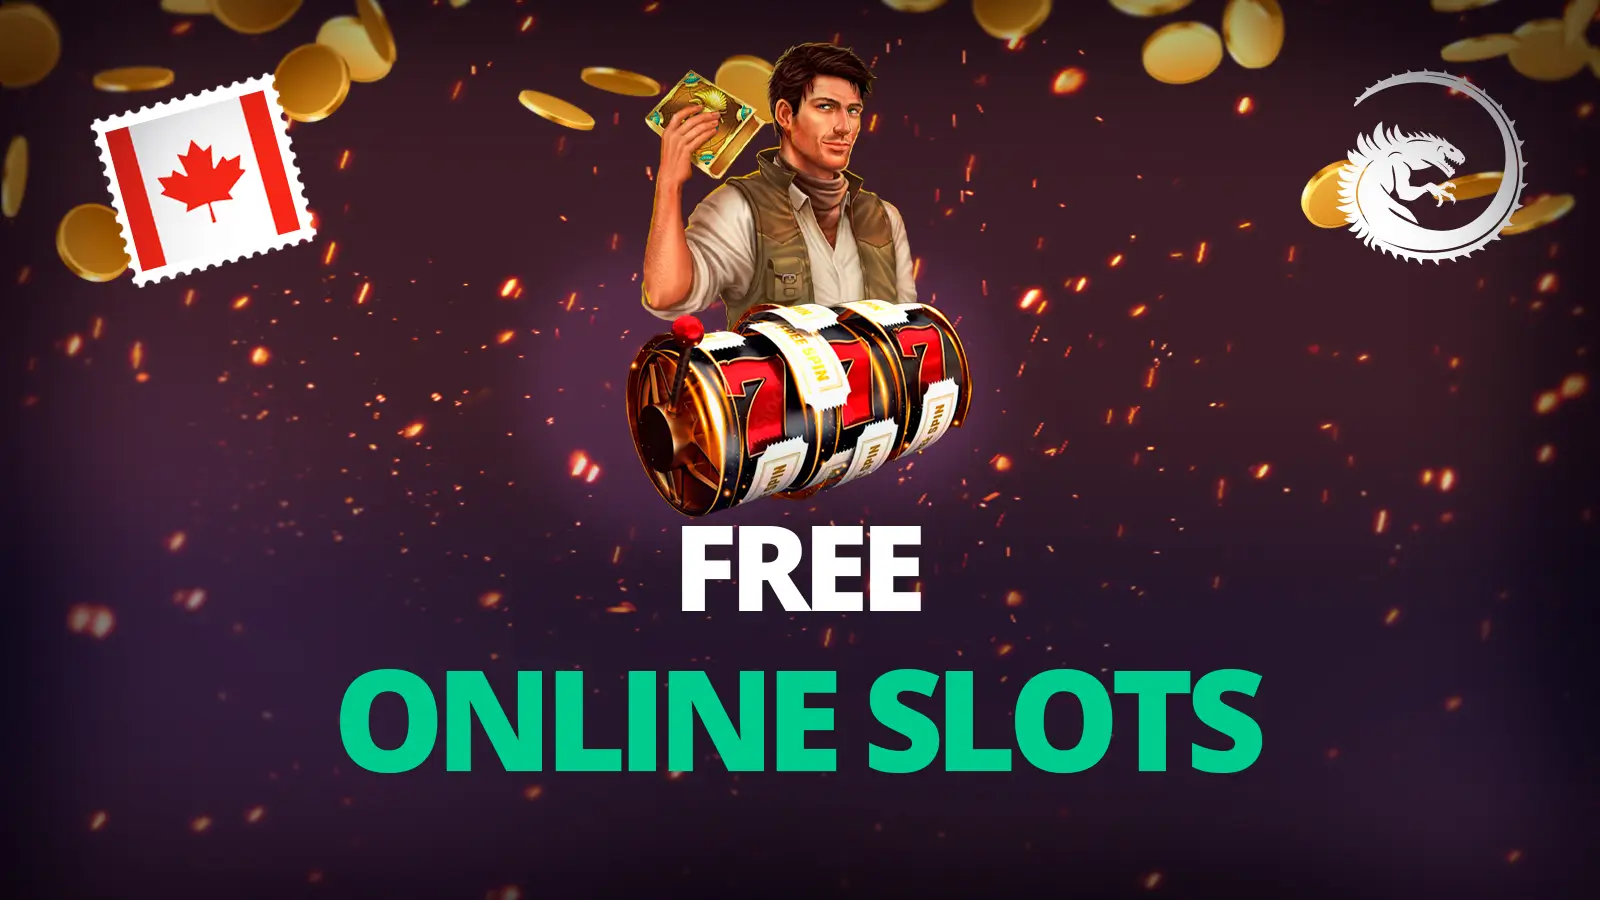 Free Casino Games Online  Aerodynamicllc.com - Aerodynamicllc